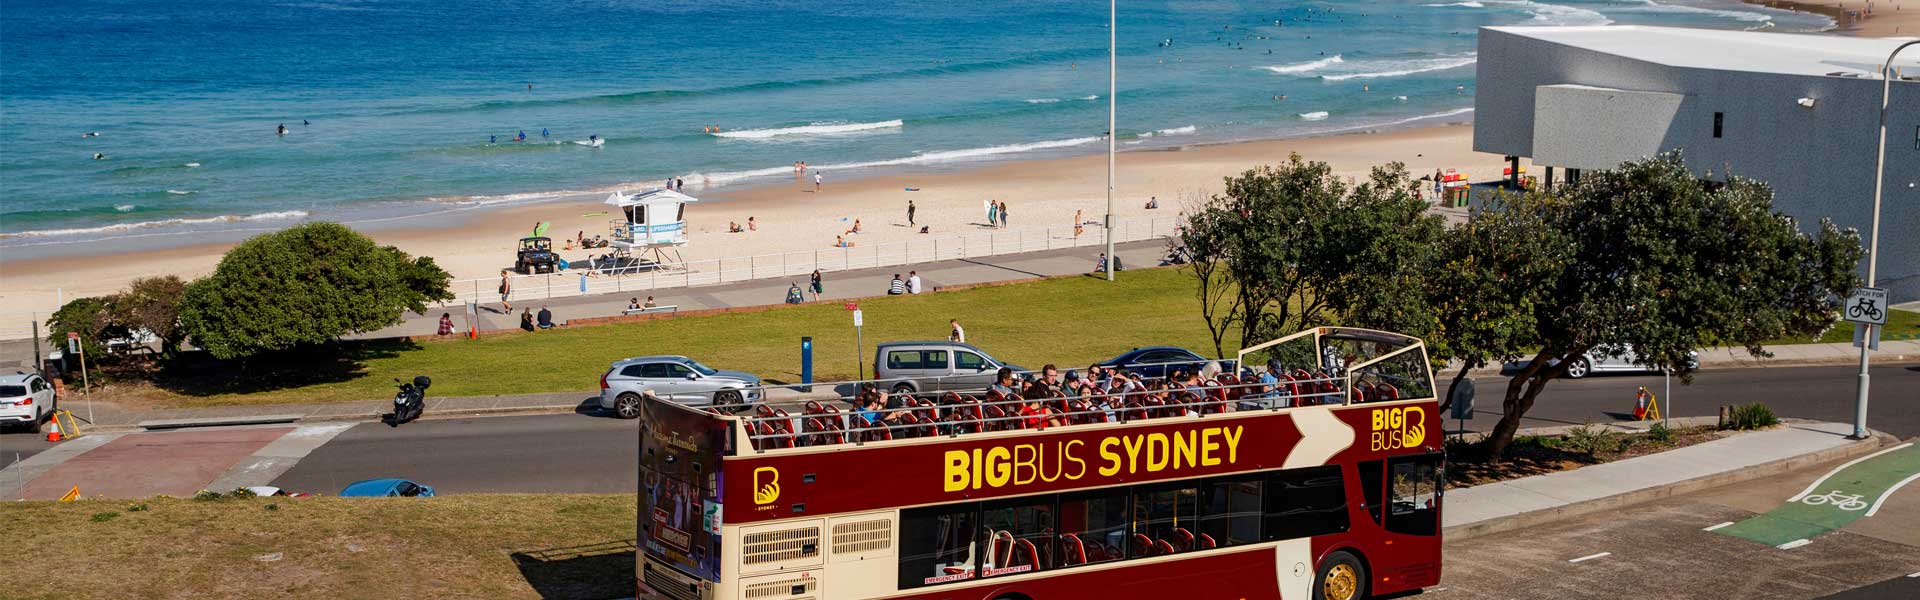 View of Big Bus Tours parked at Bondi Beach in Sydney, Australia